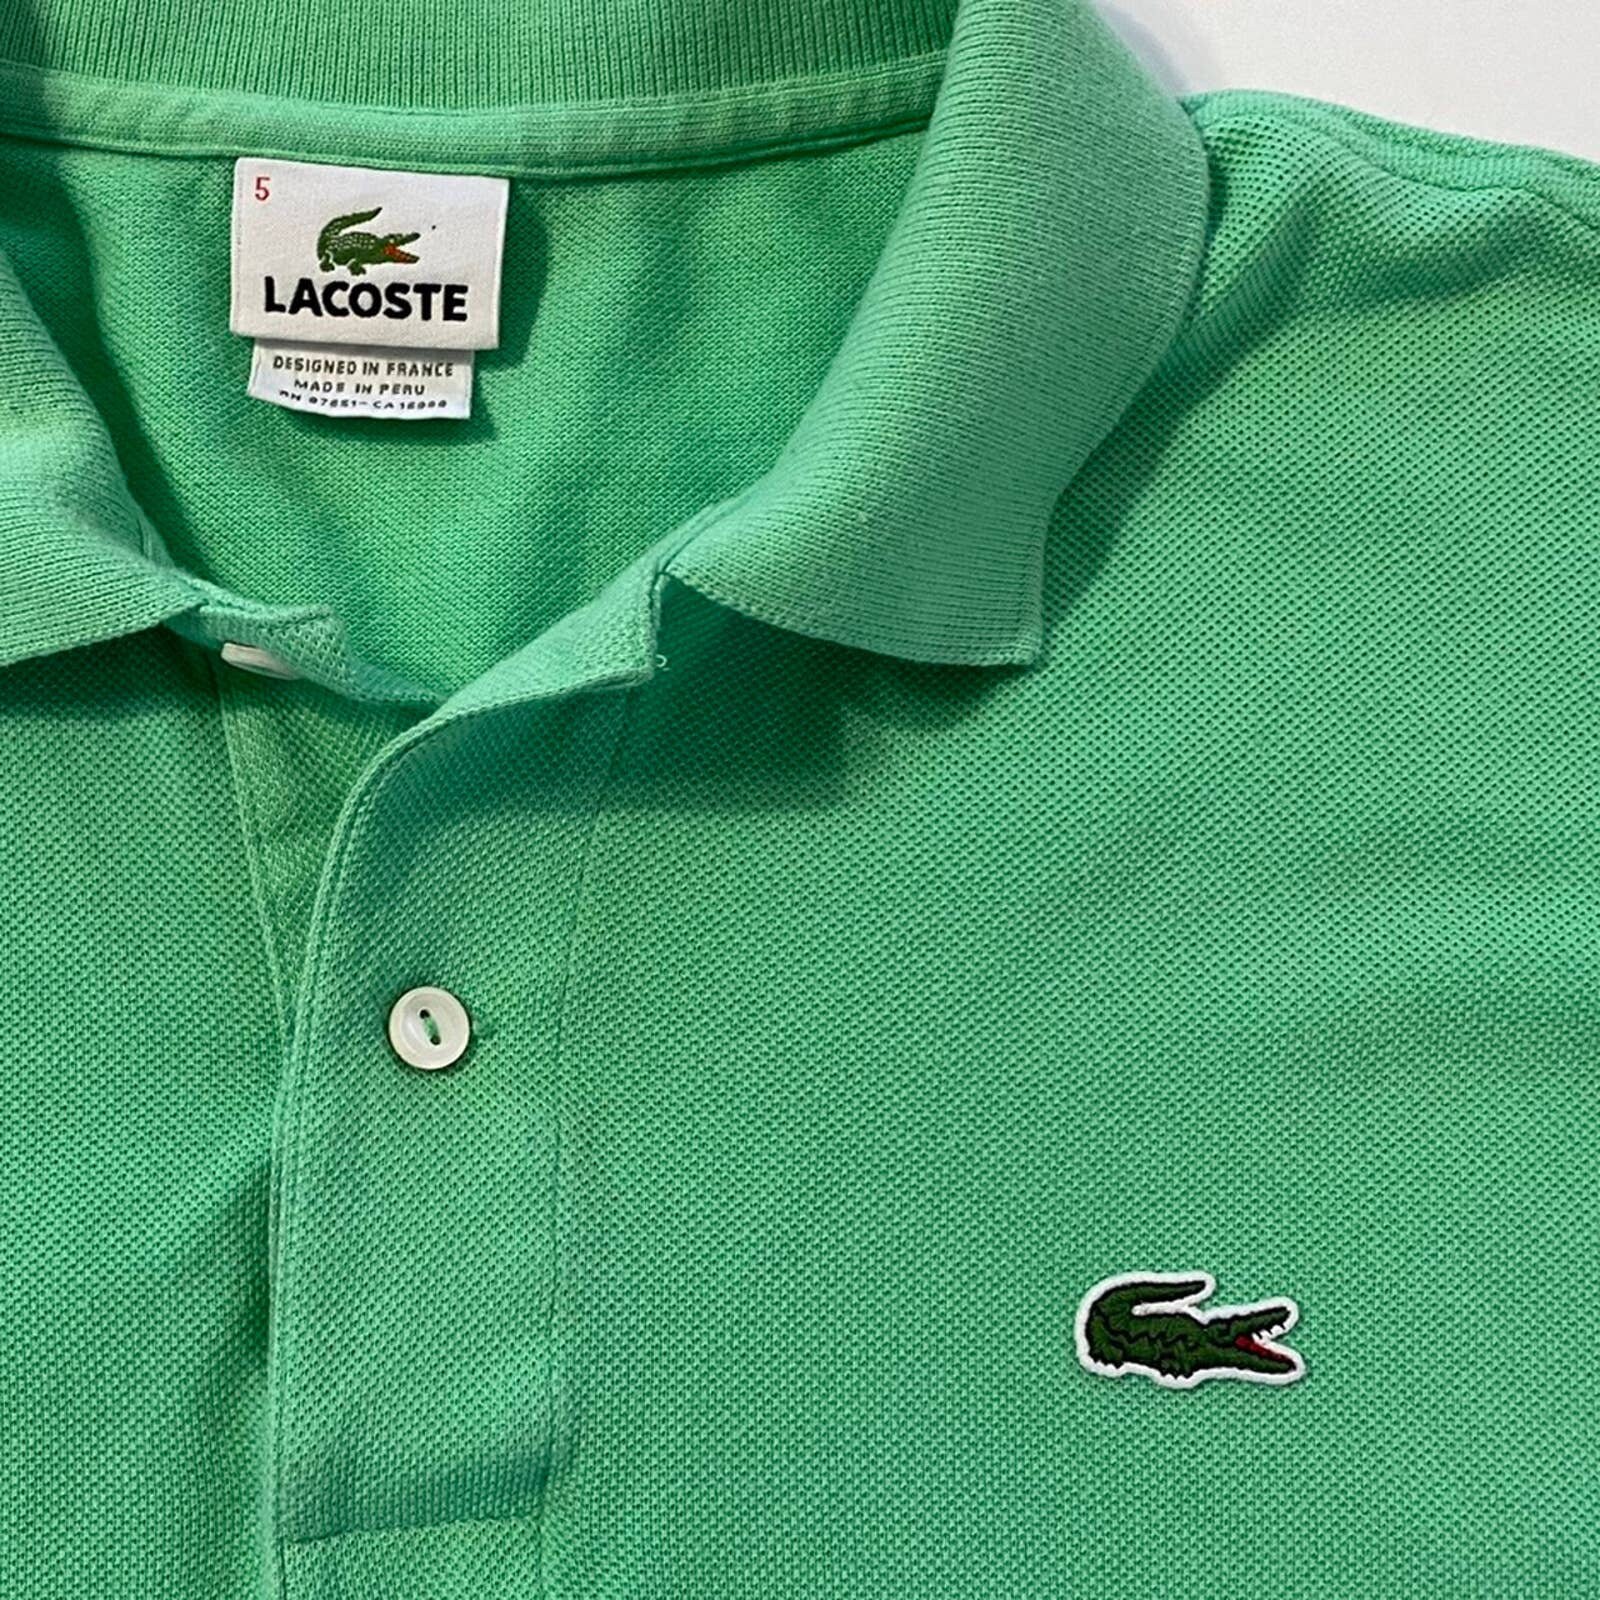 Lacoste Retro Alligator Logo Green Men's Polo | Etsy